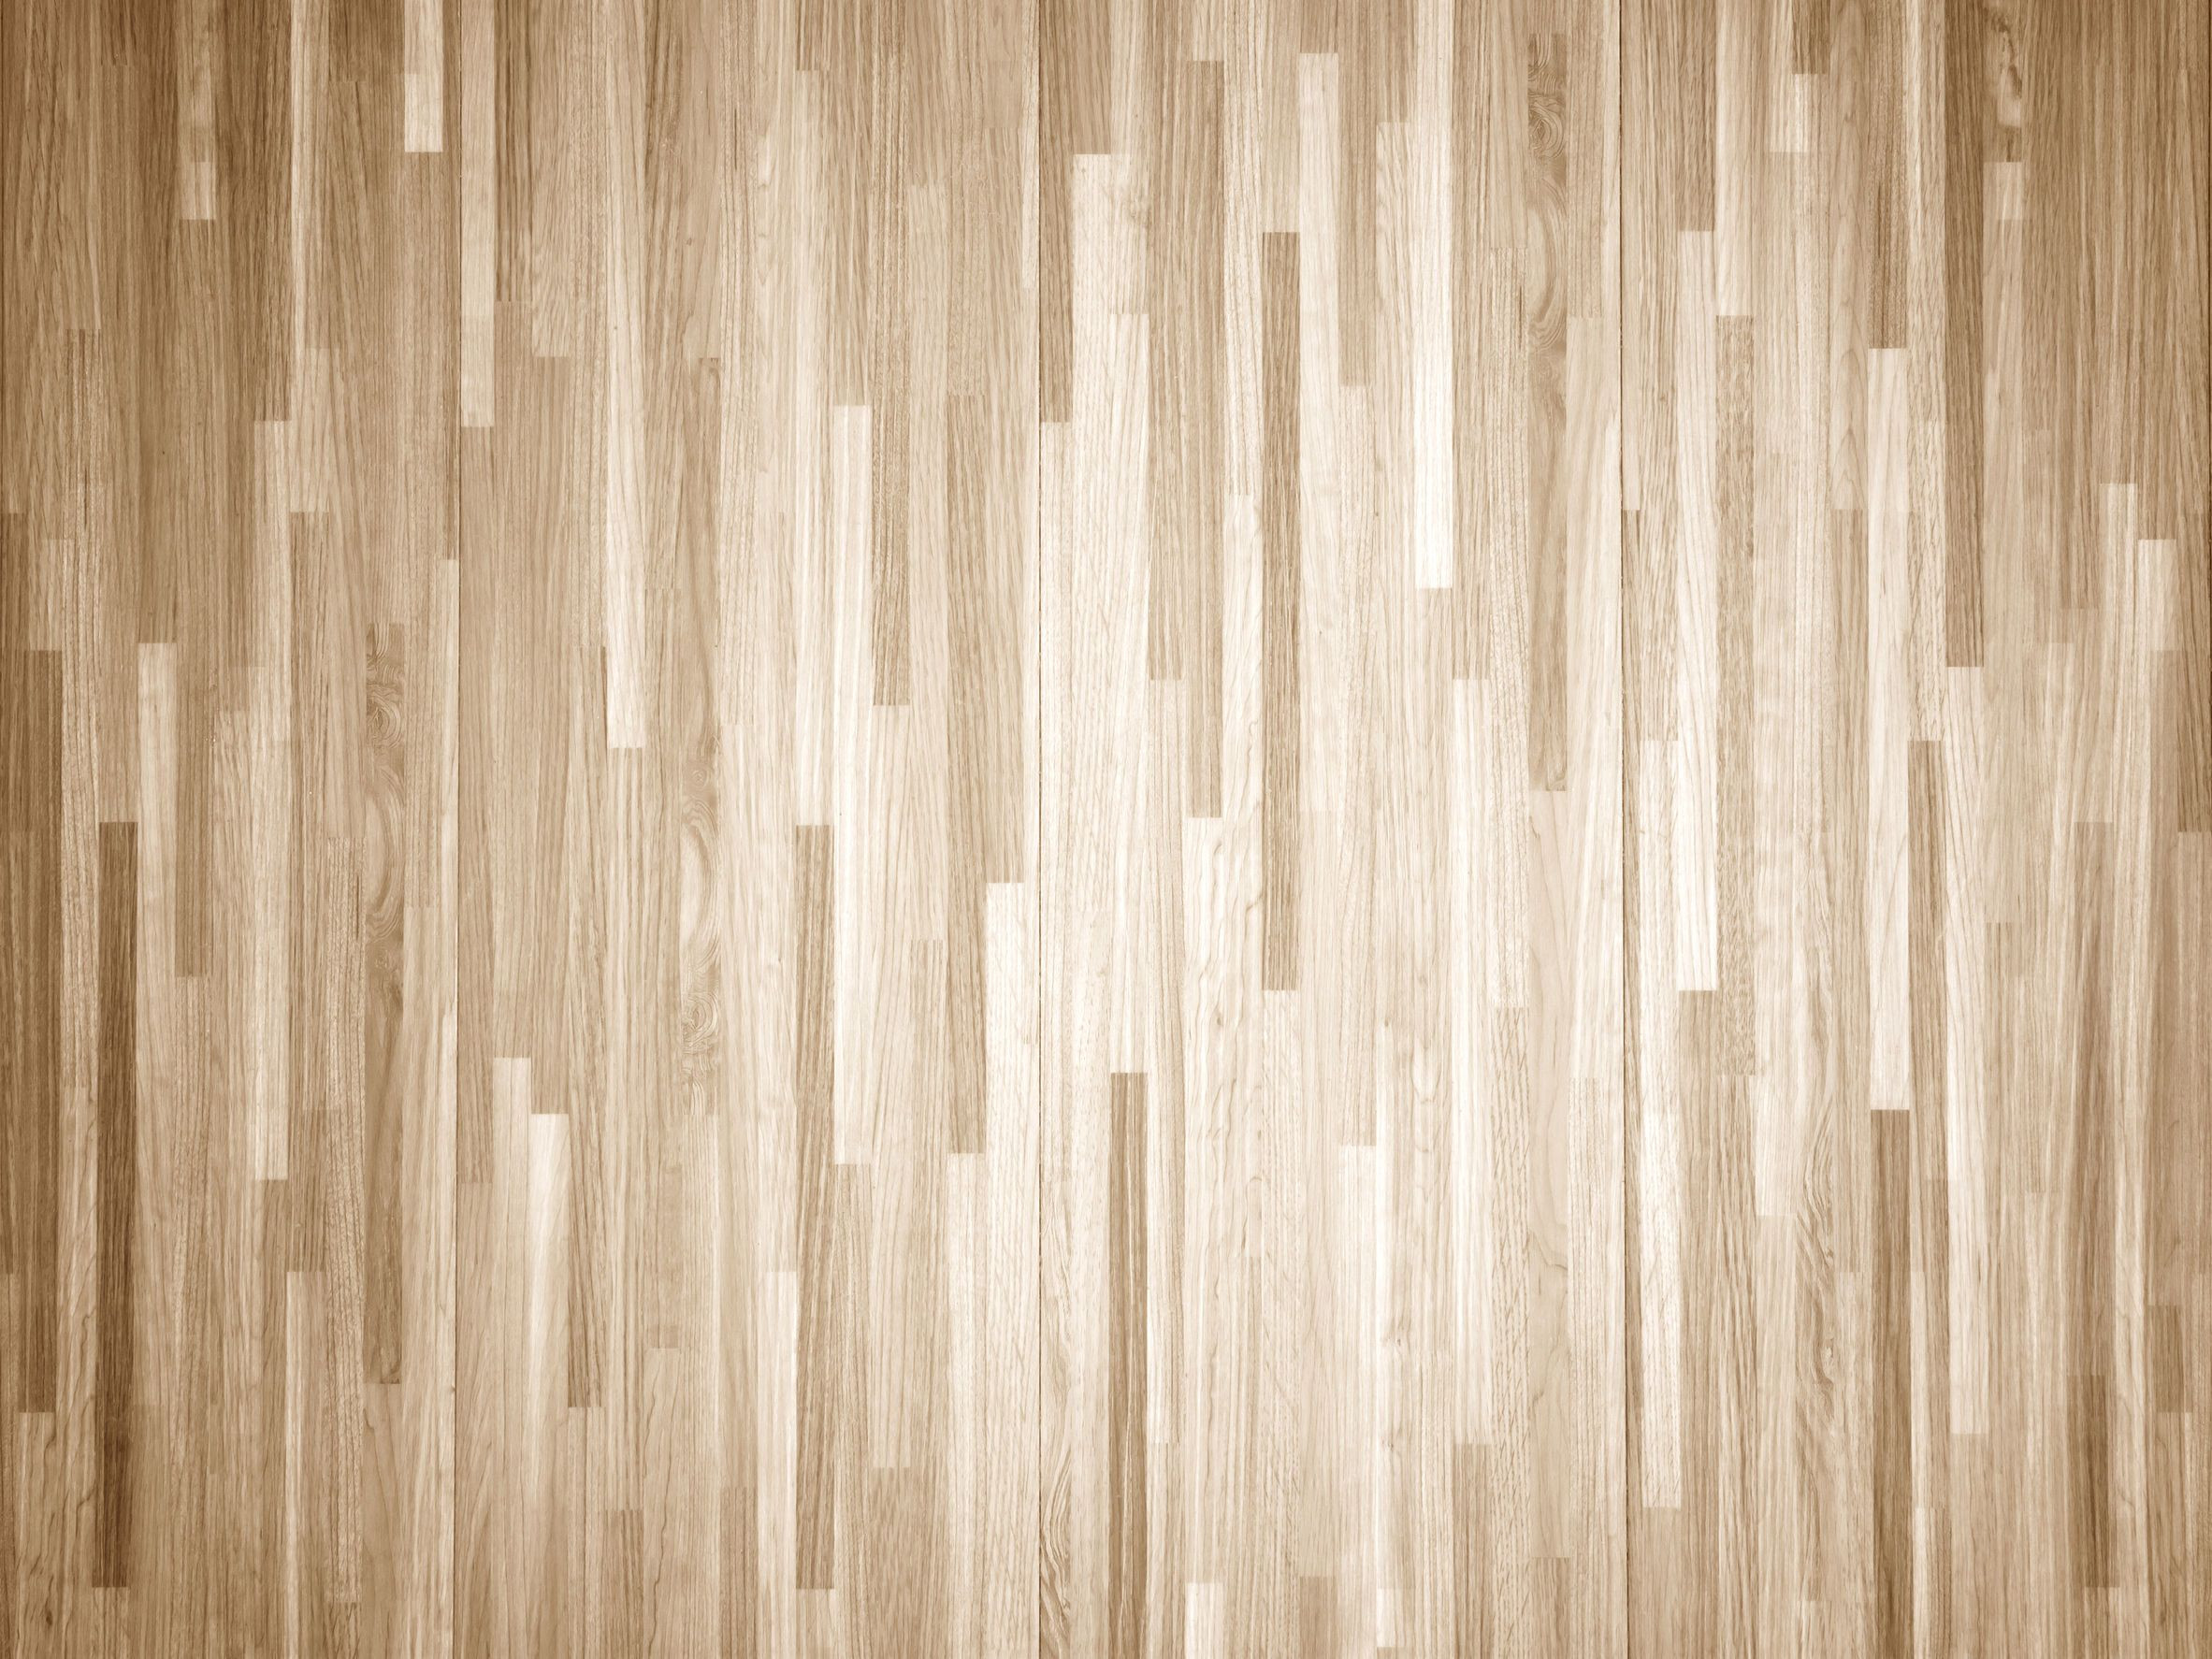 11 Lovely Hardwood Flooring Sq Ft Price 2024 free download hardwood flooring sq ft price of how to chemically strip wood floors woodfloordoctor com with regard to you